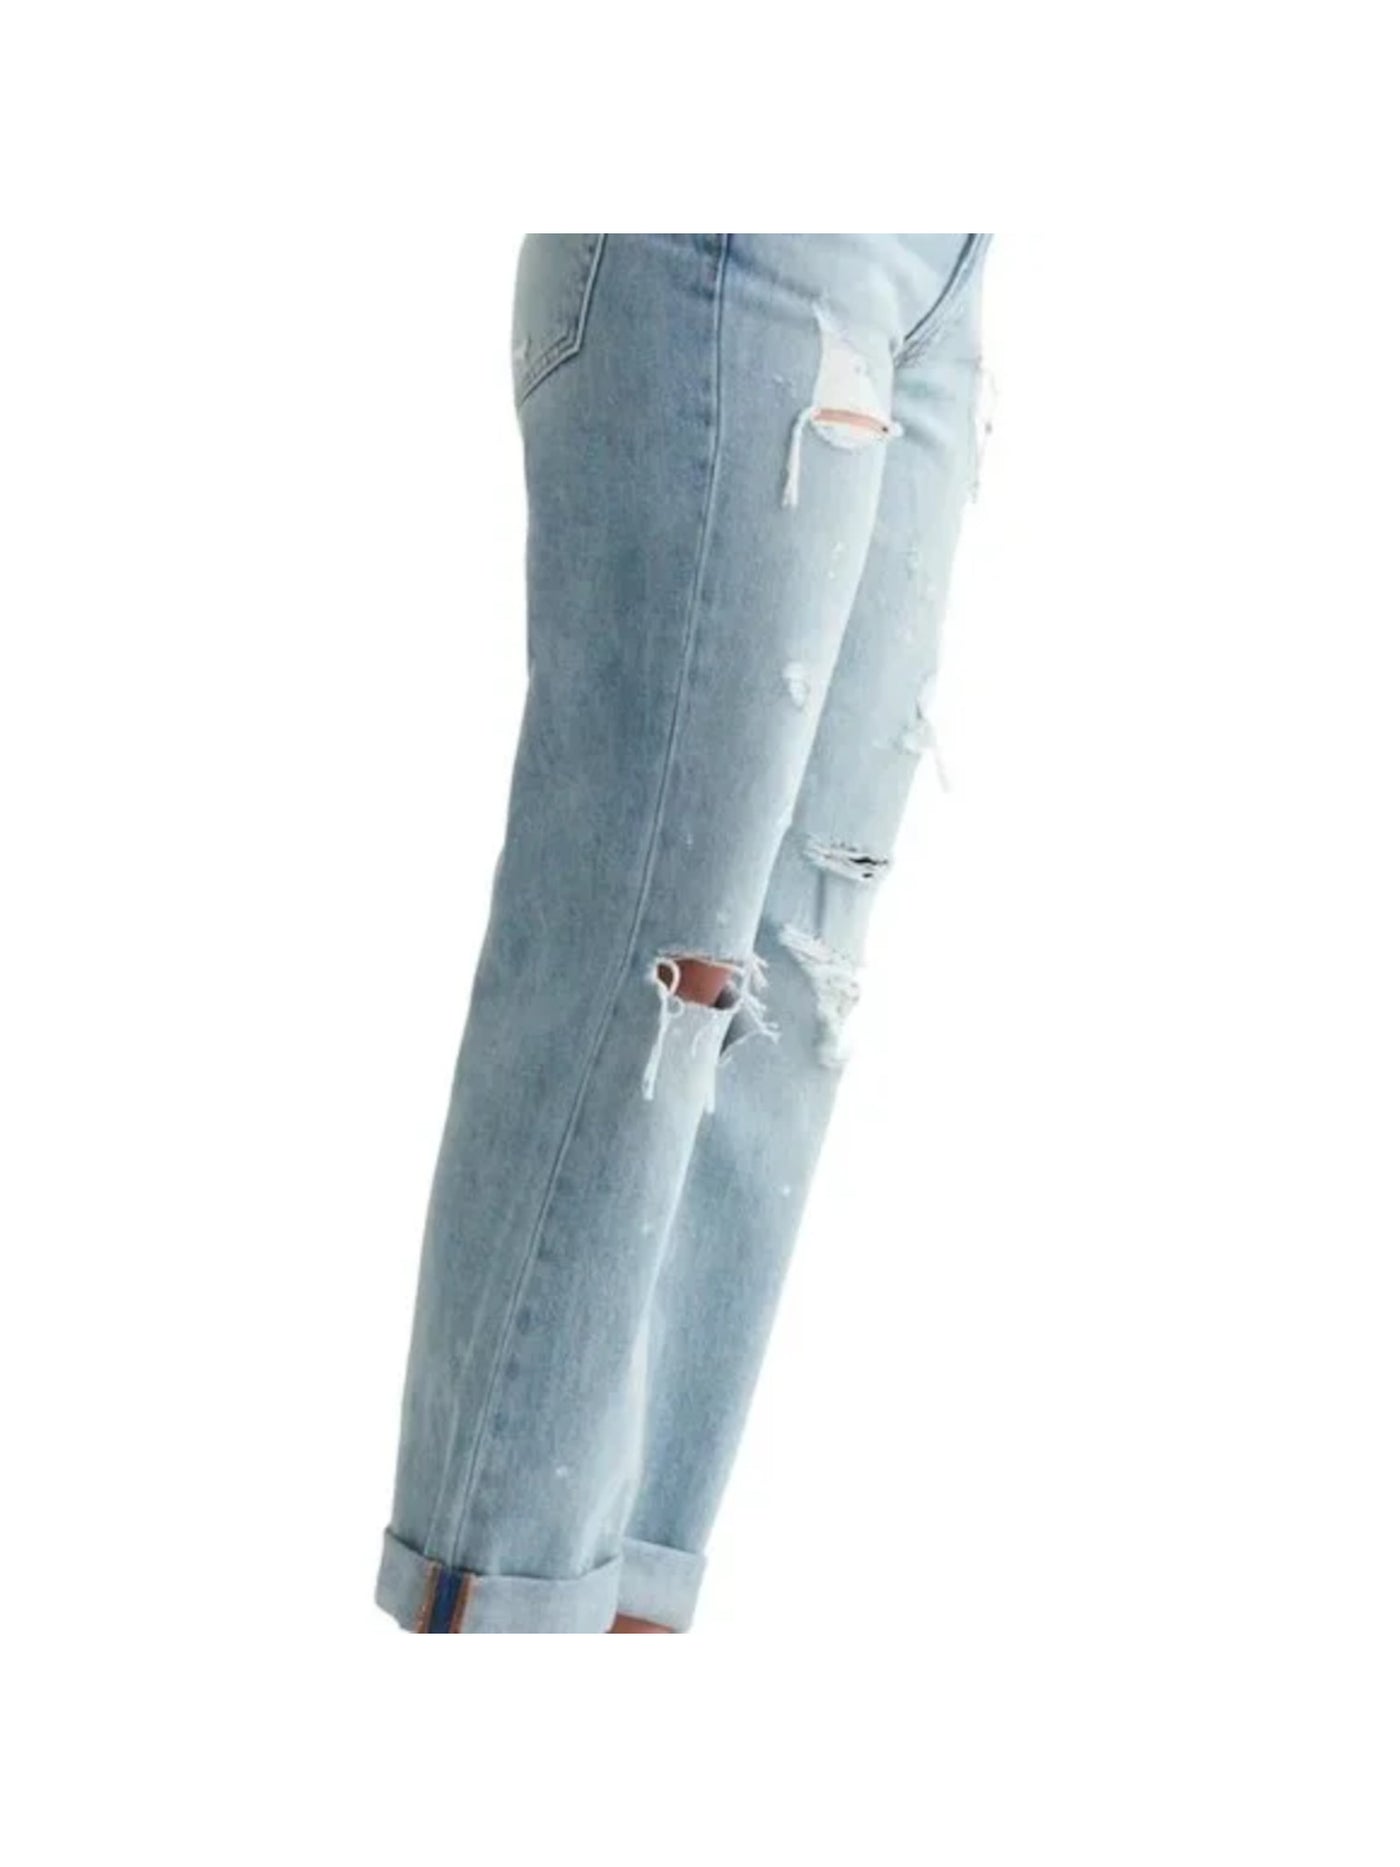 LUCKY BRAND Womens Light Blue Pocketed Zippered Mid-rise Boyfriend Jeans 0/25